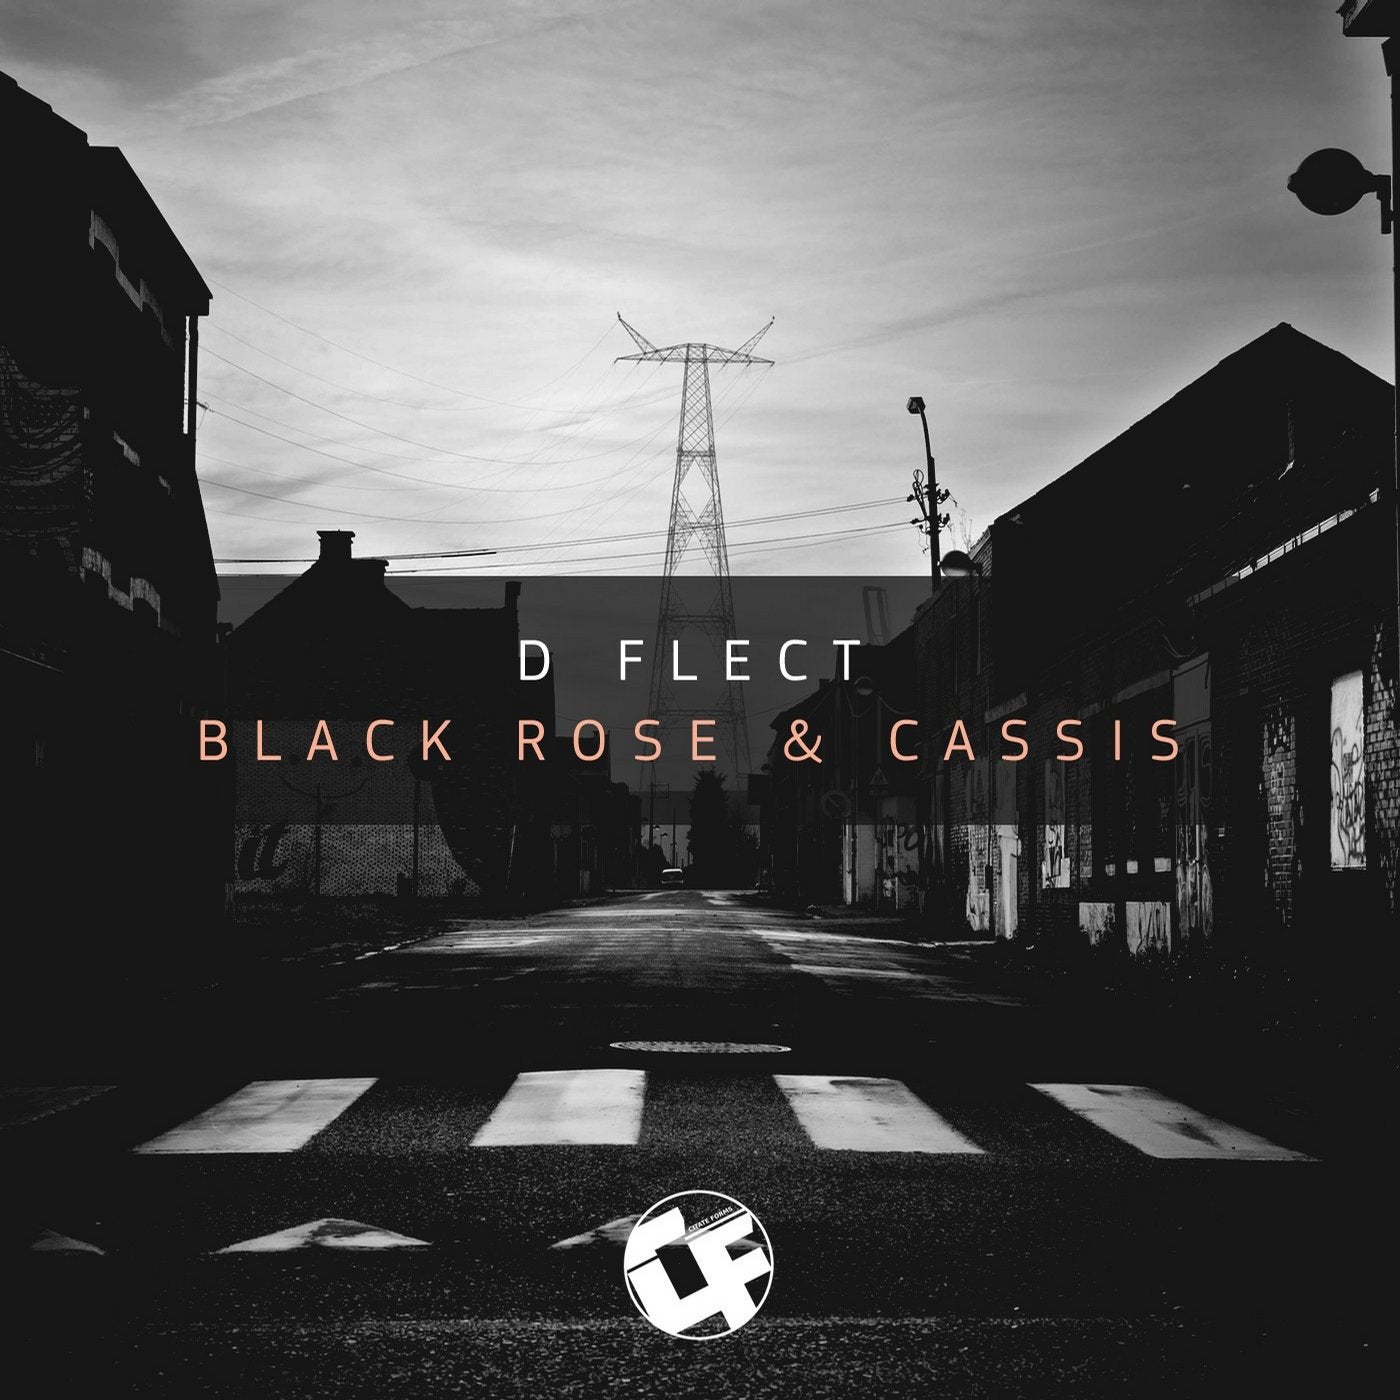 Black Rose & Cassis